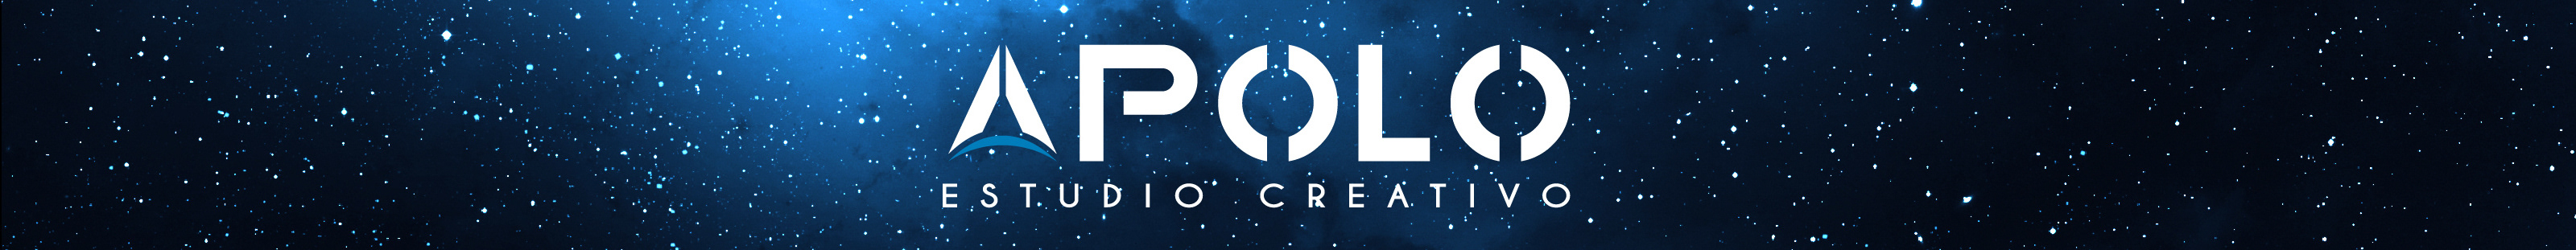 Apolo Studios's profile banner